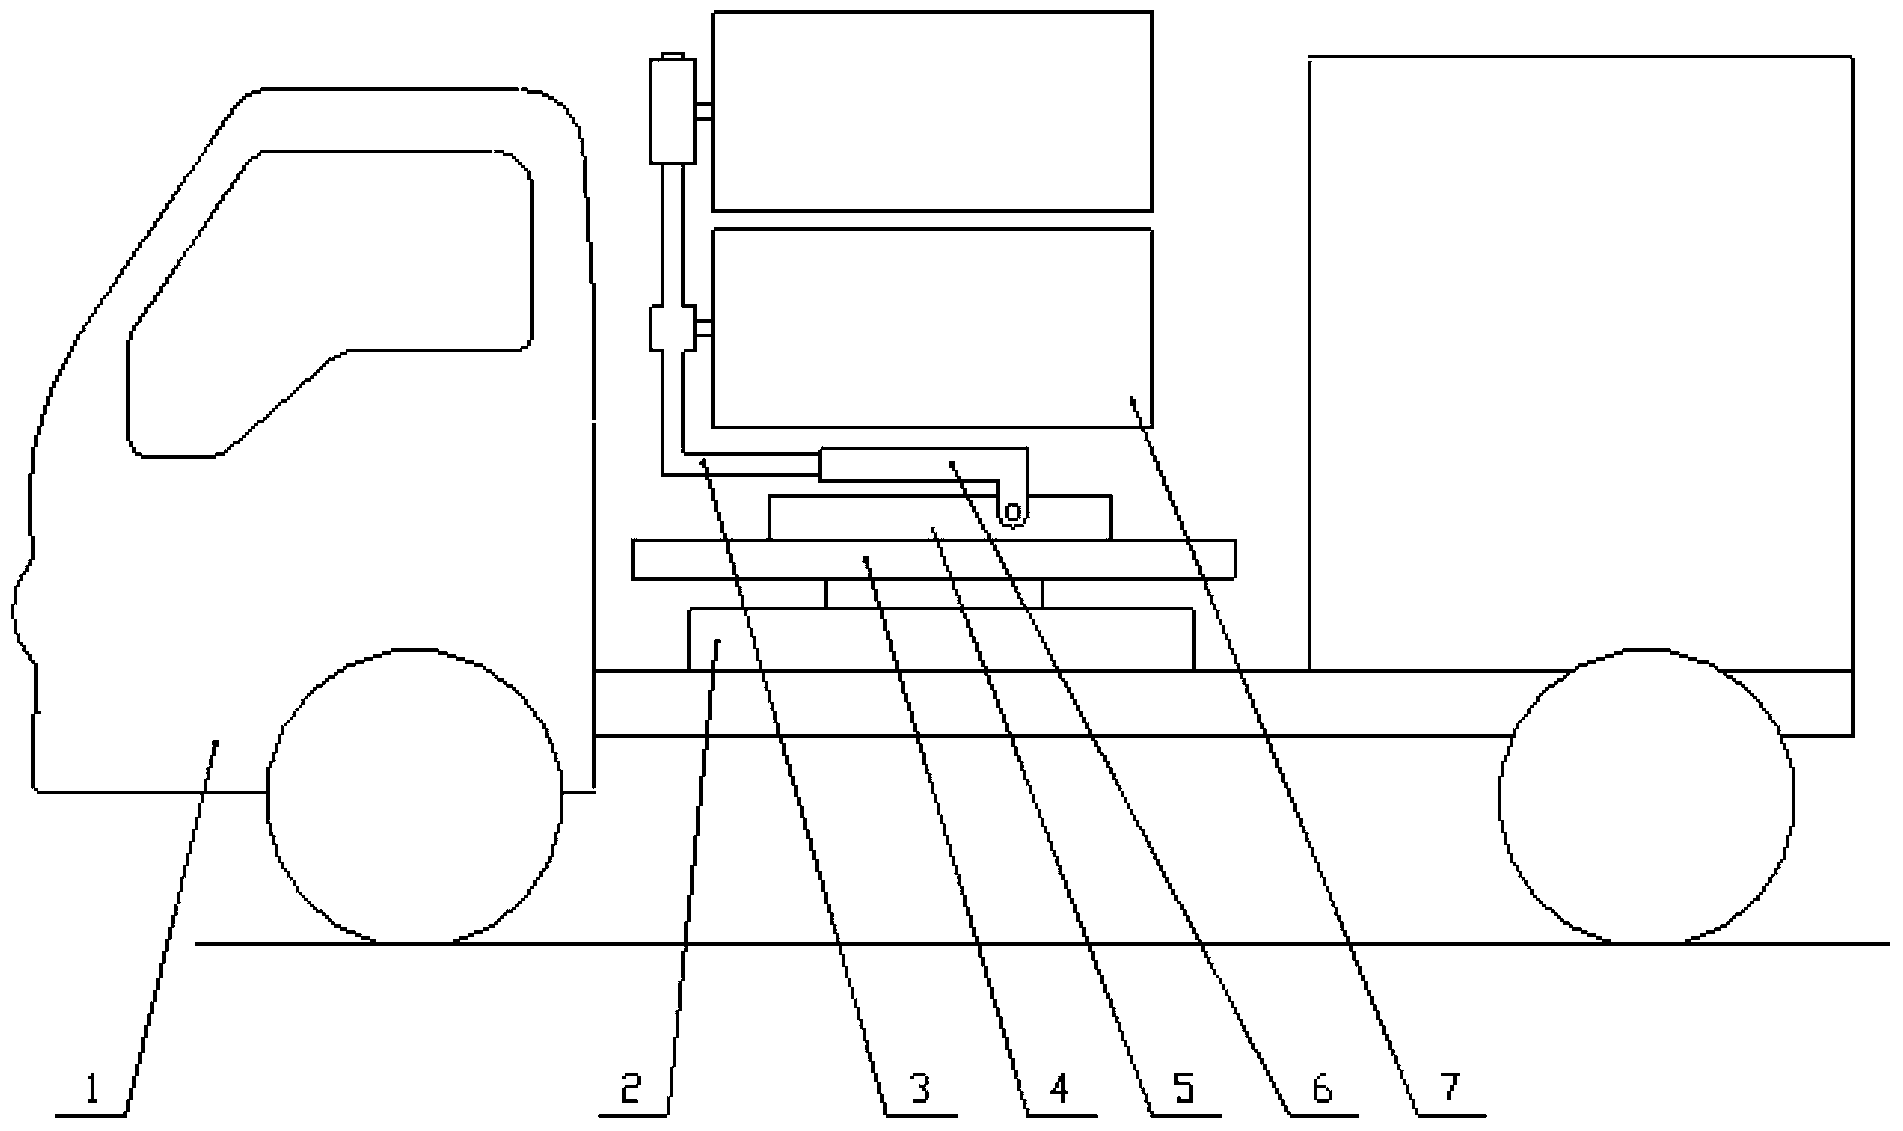 Bidirectional guardrail cleaning vehicle